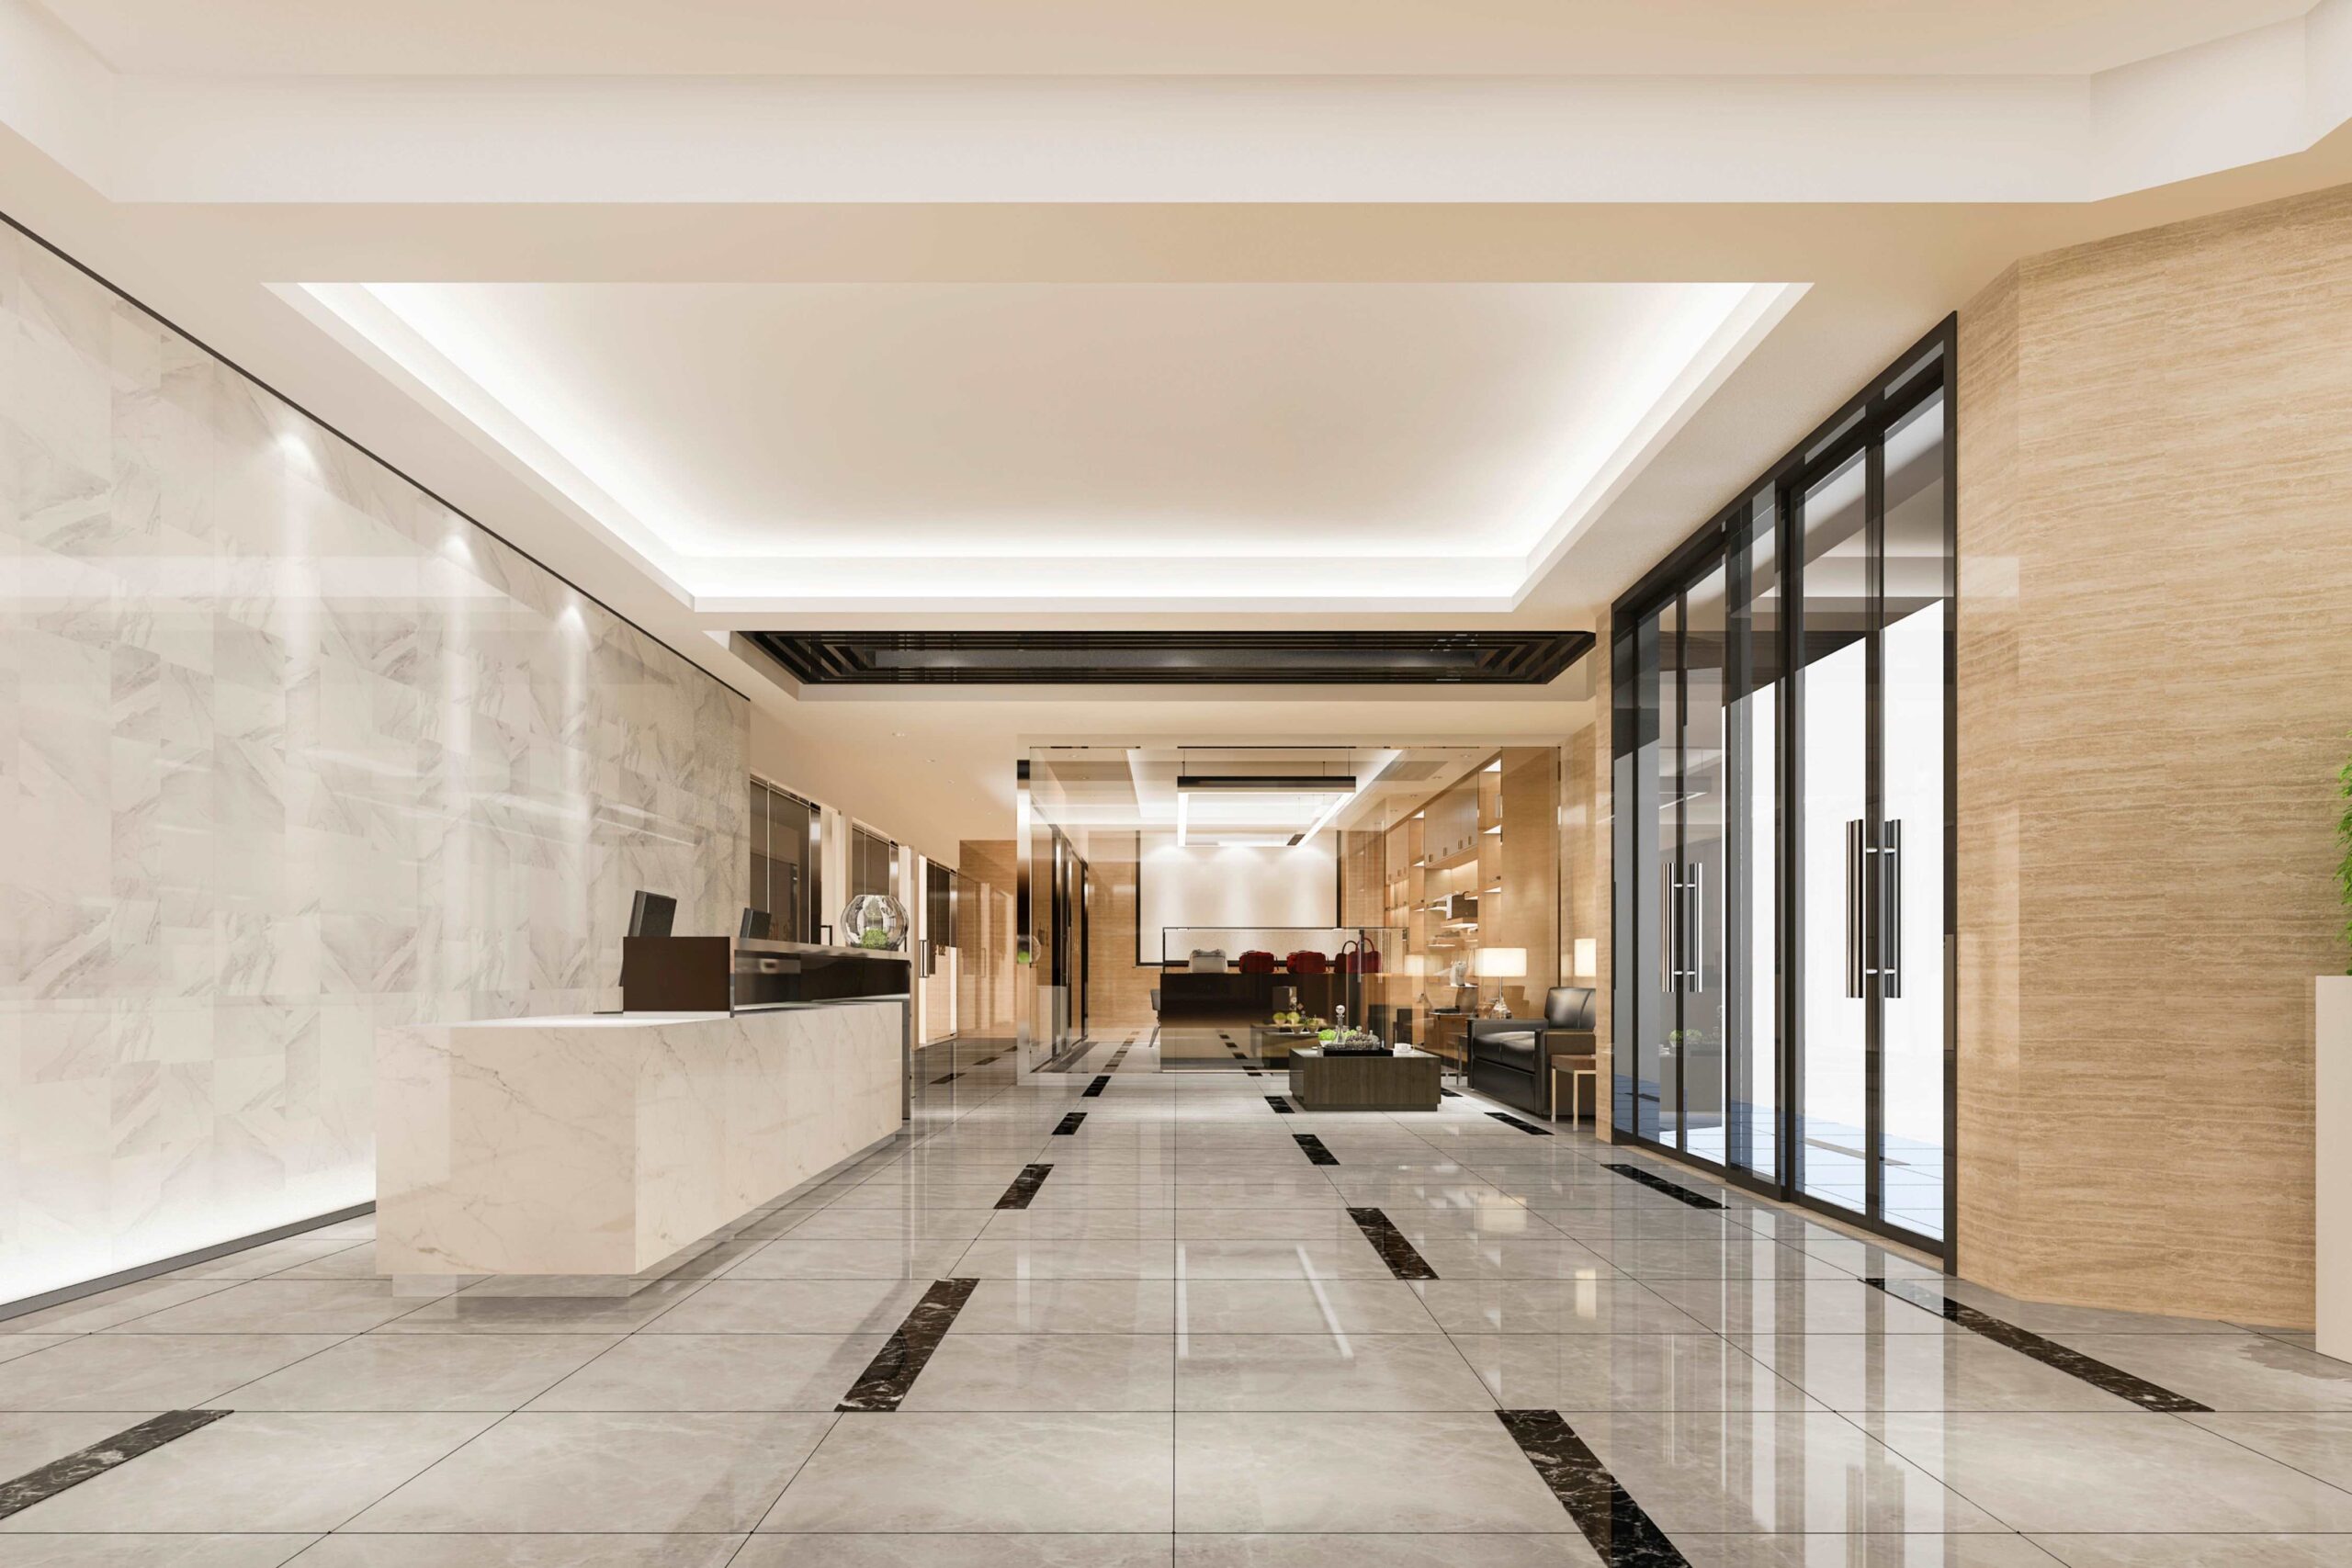 Luxury hotel reception interior design